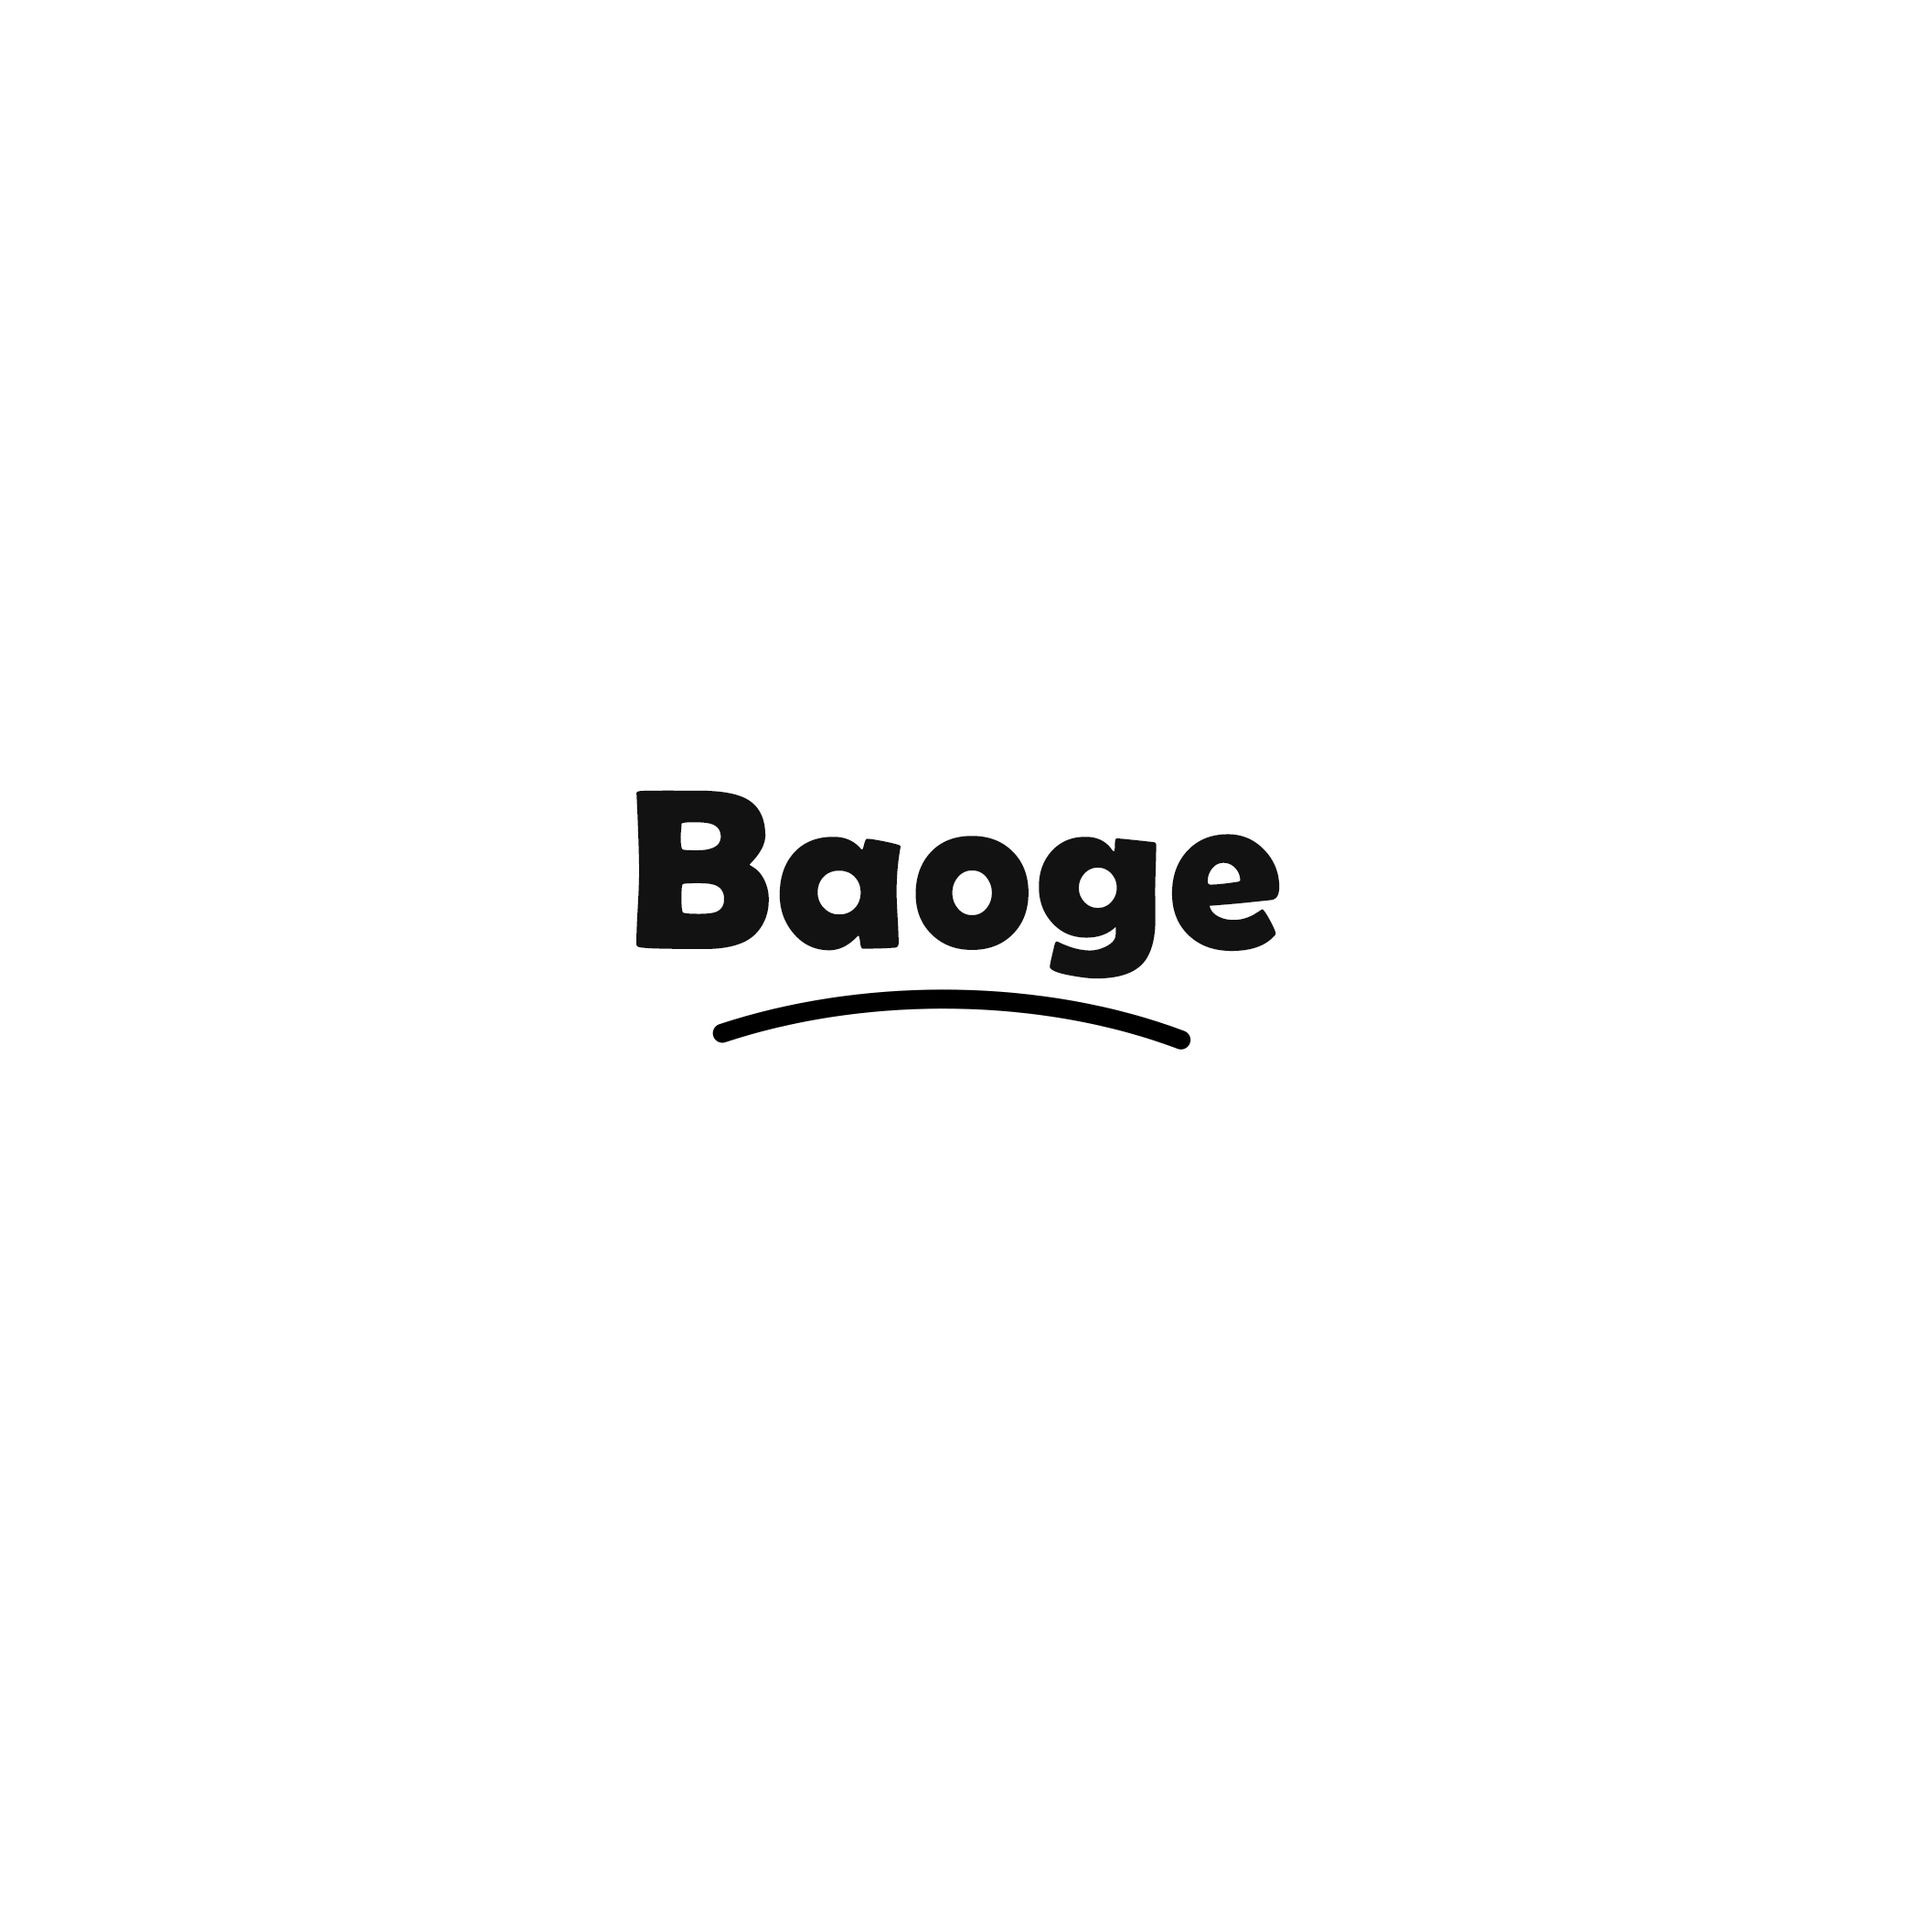 Product Brand: Baoge